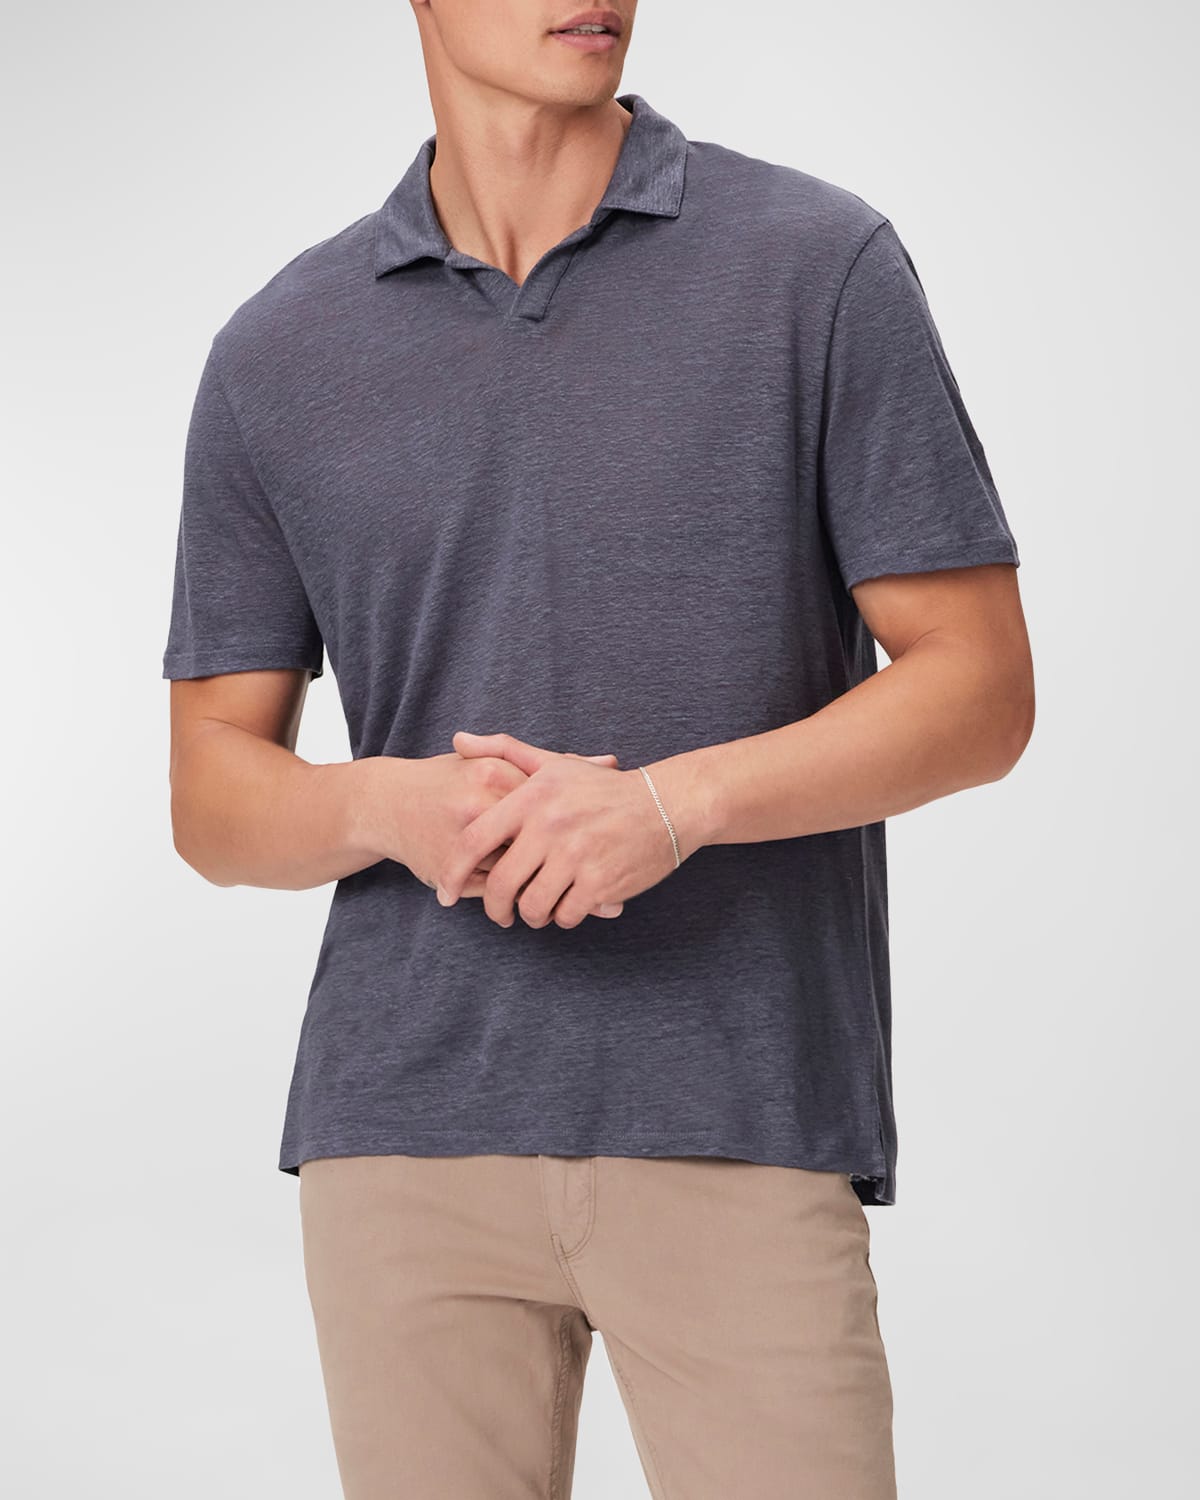 Men's Shelton Linen Polo Shirt